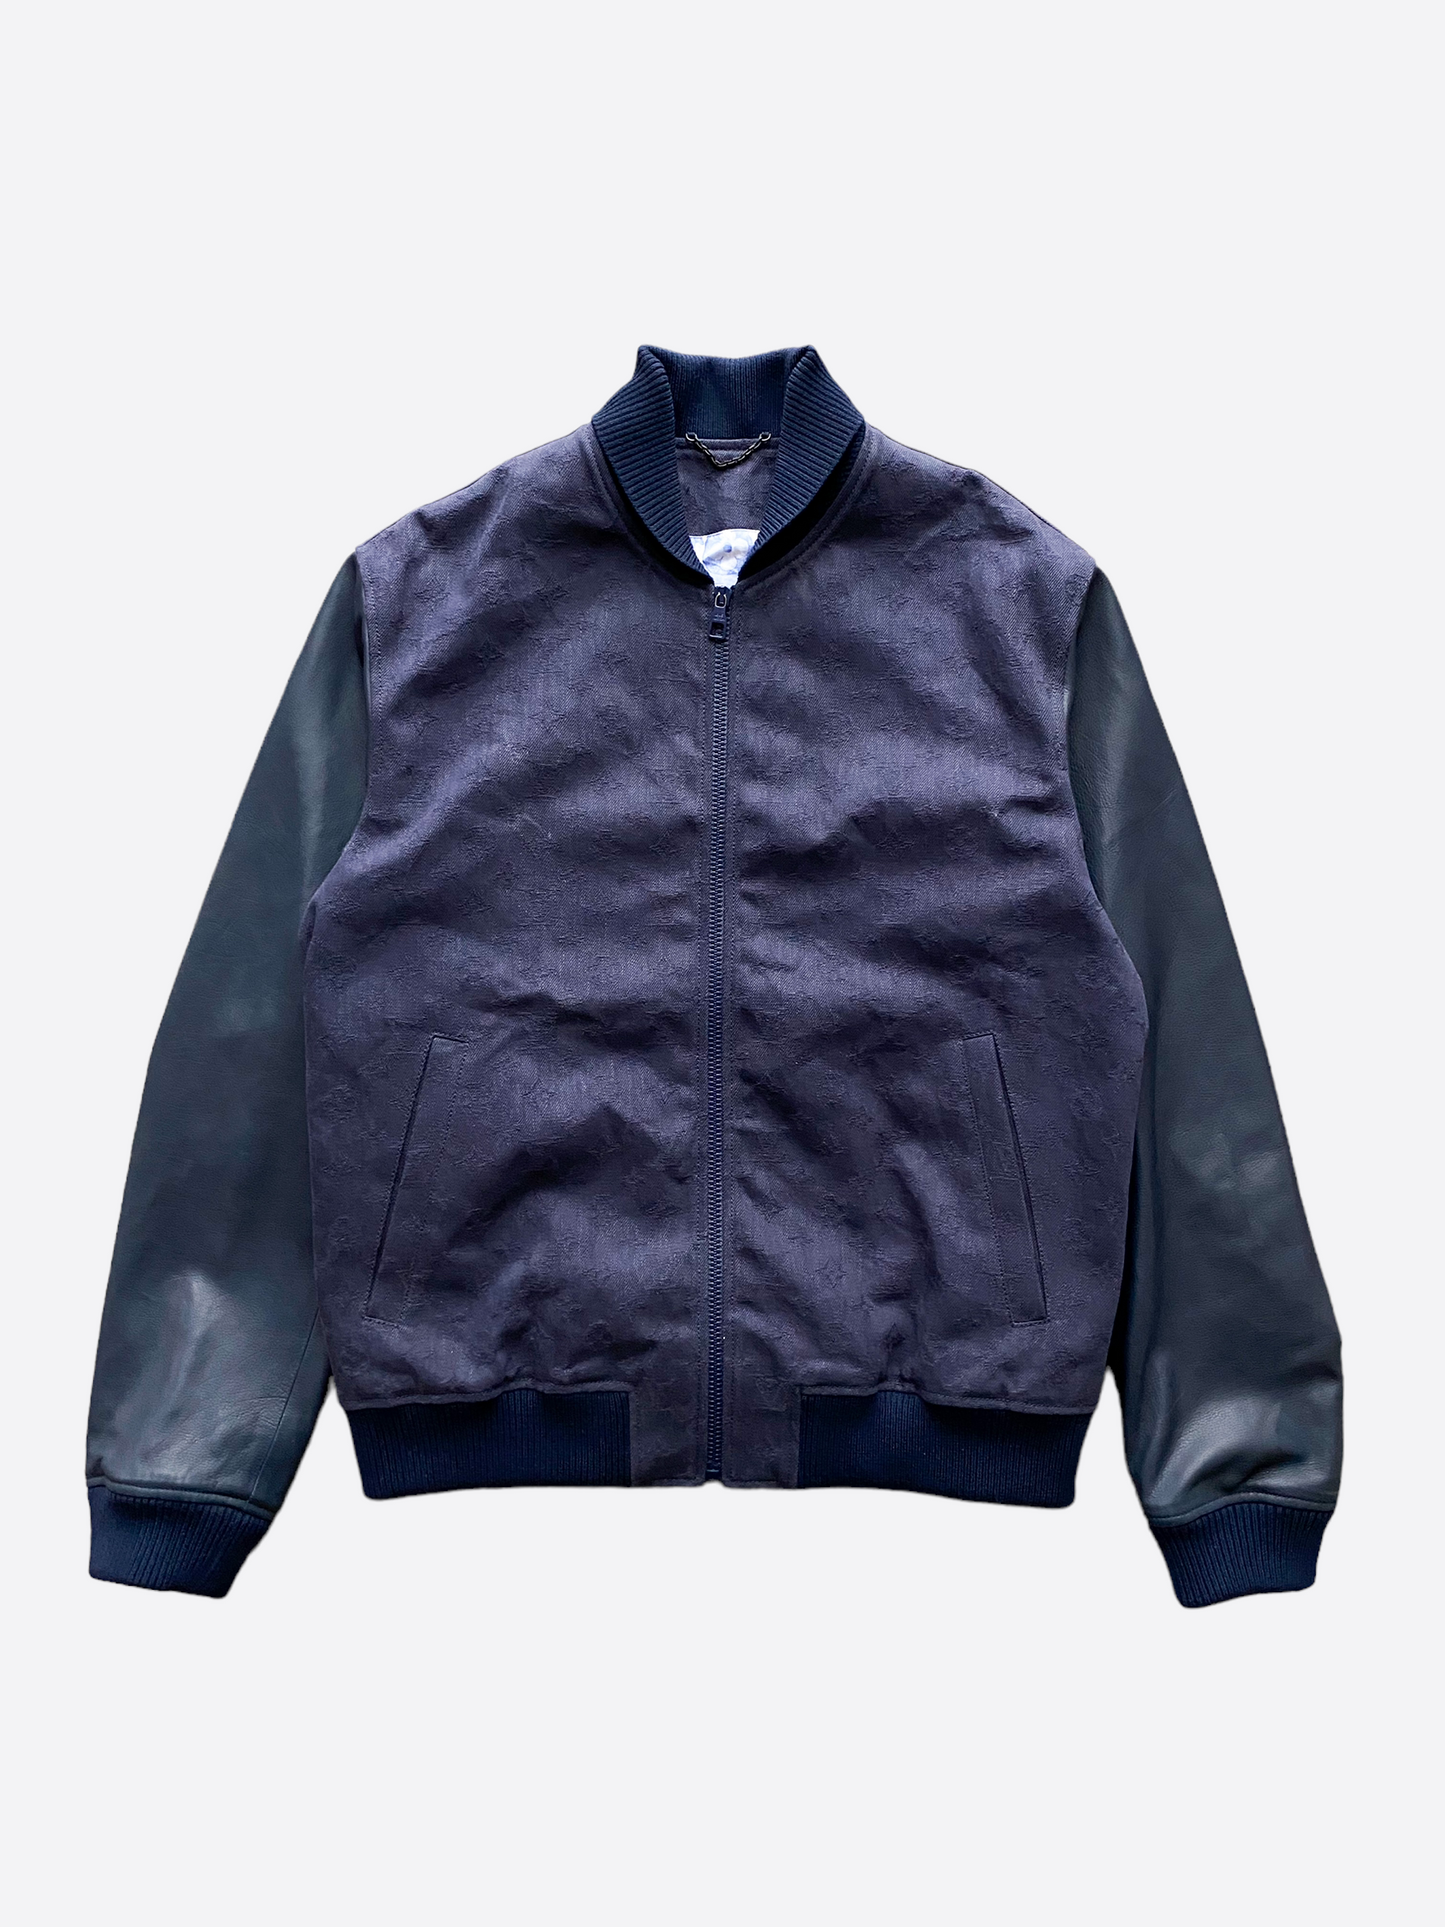 vuitton watercolor jacket